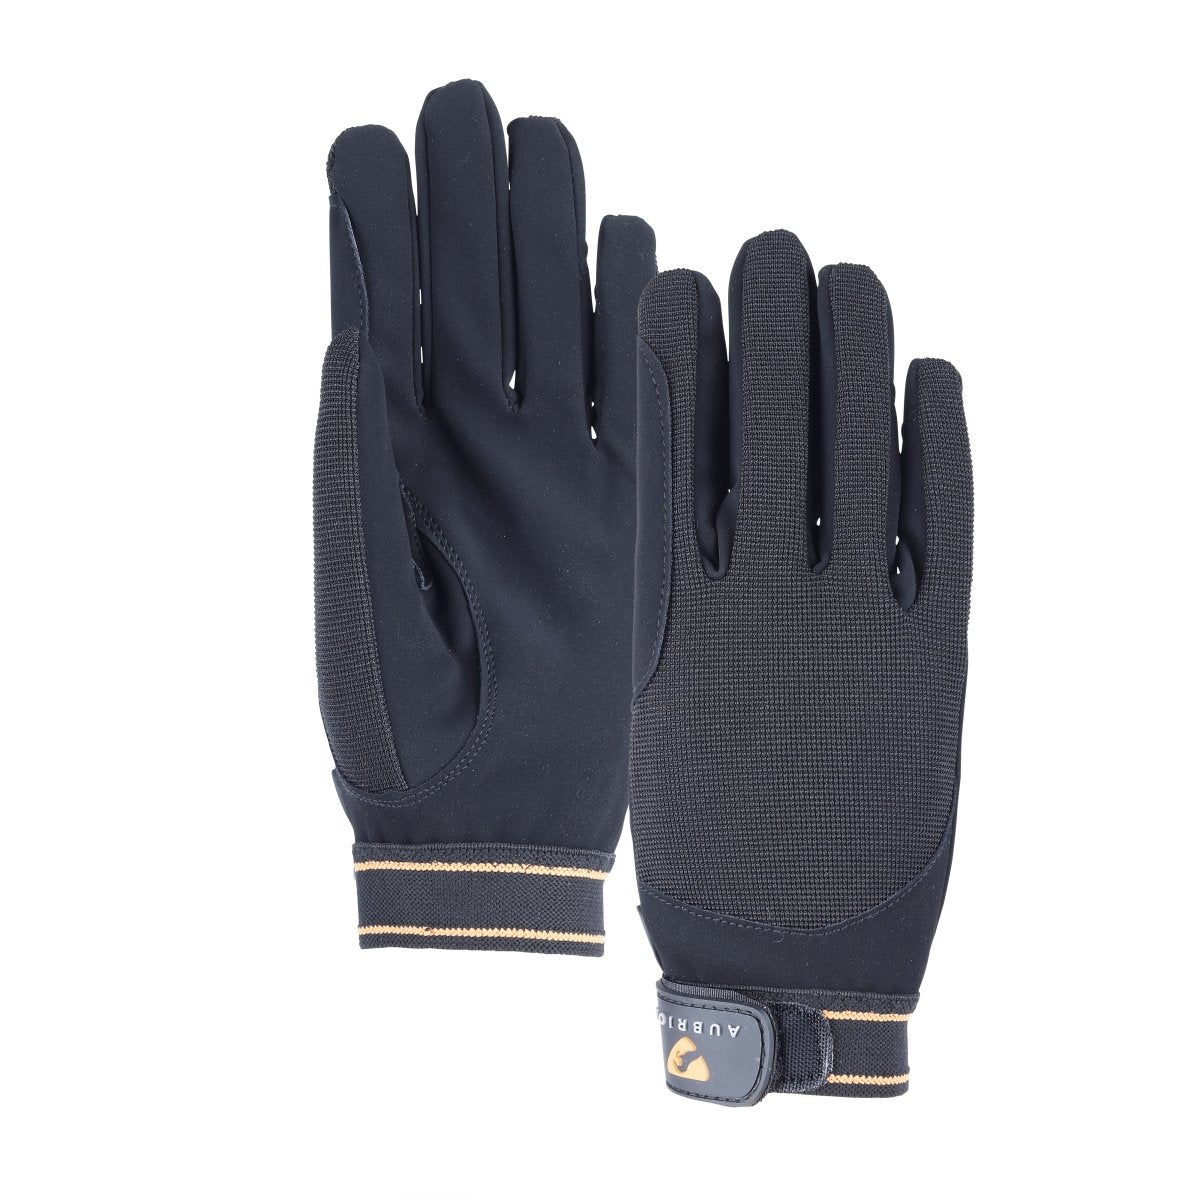 Aubrion Stratos SportFit Riding Gloves - Black - XS